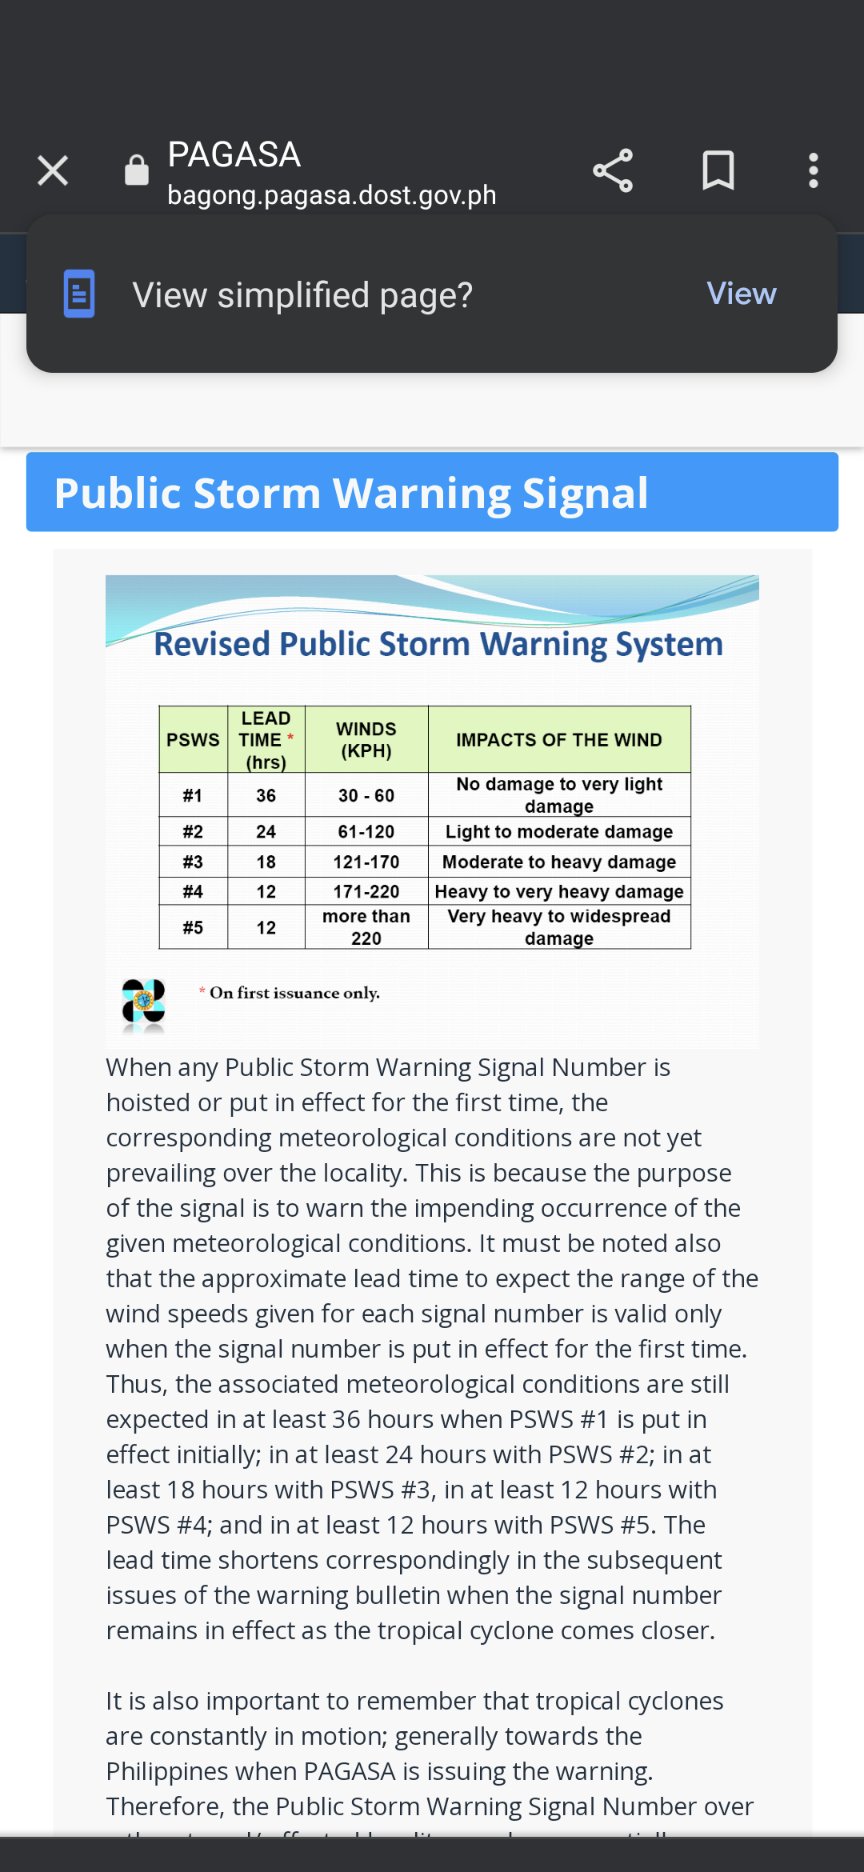 Public storm warning signal #1